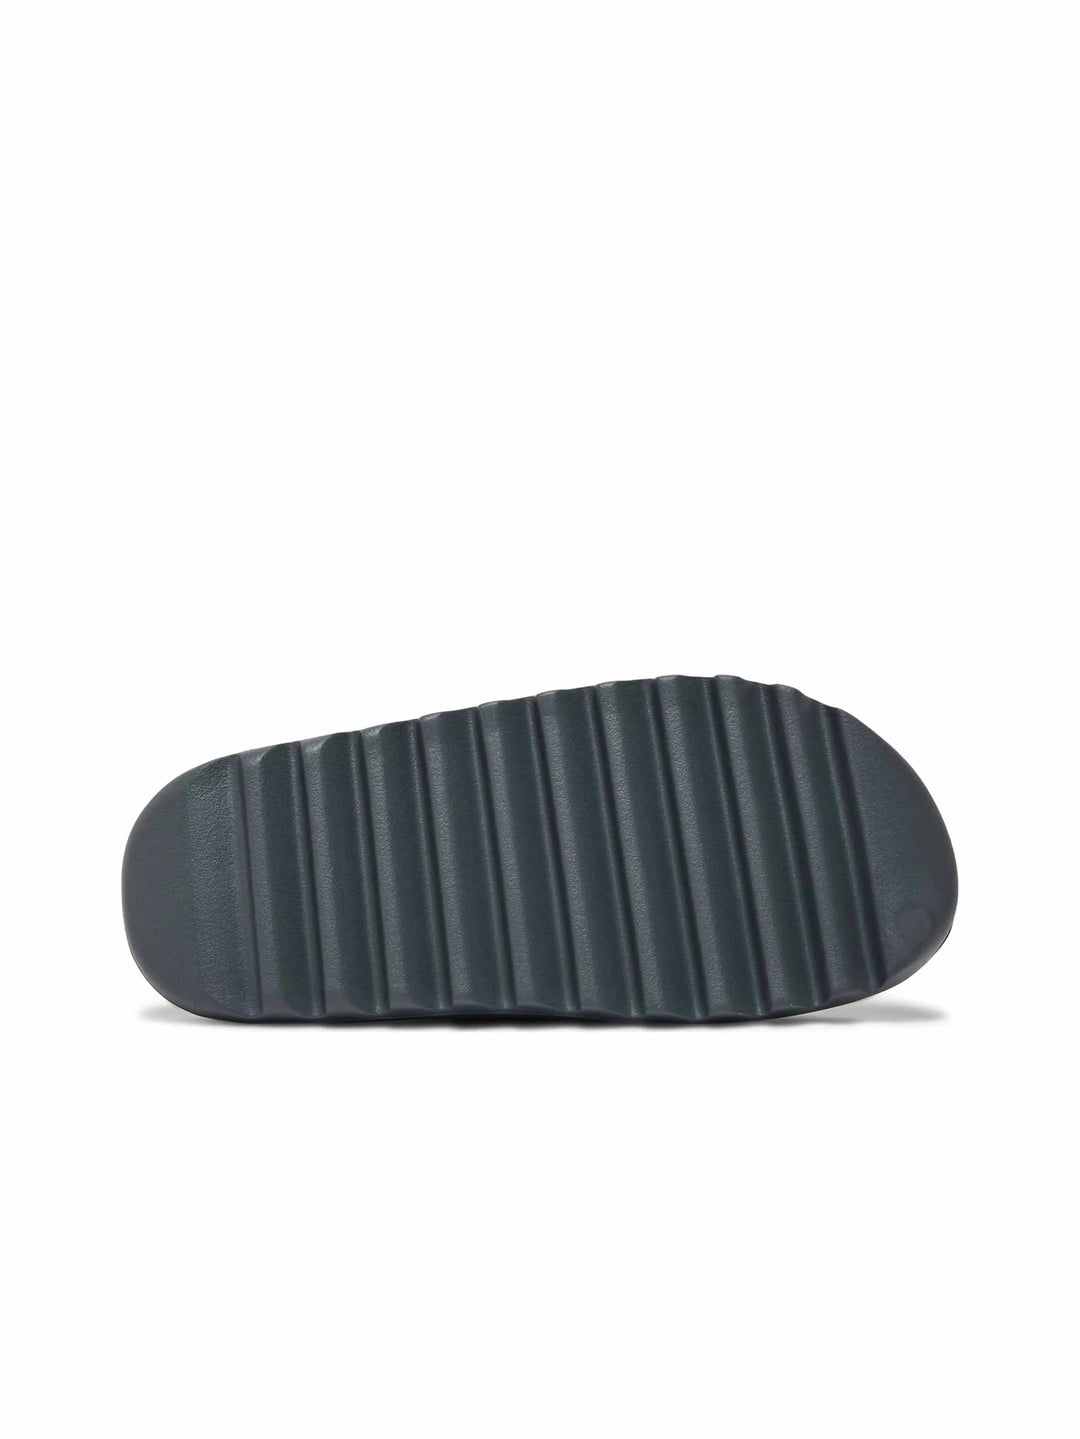 adidas Yeezy Slide Slate Grey - Prior